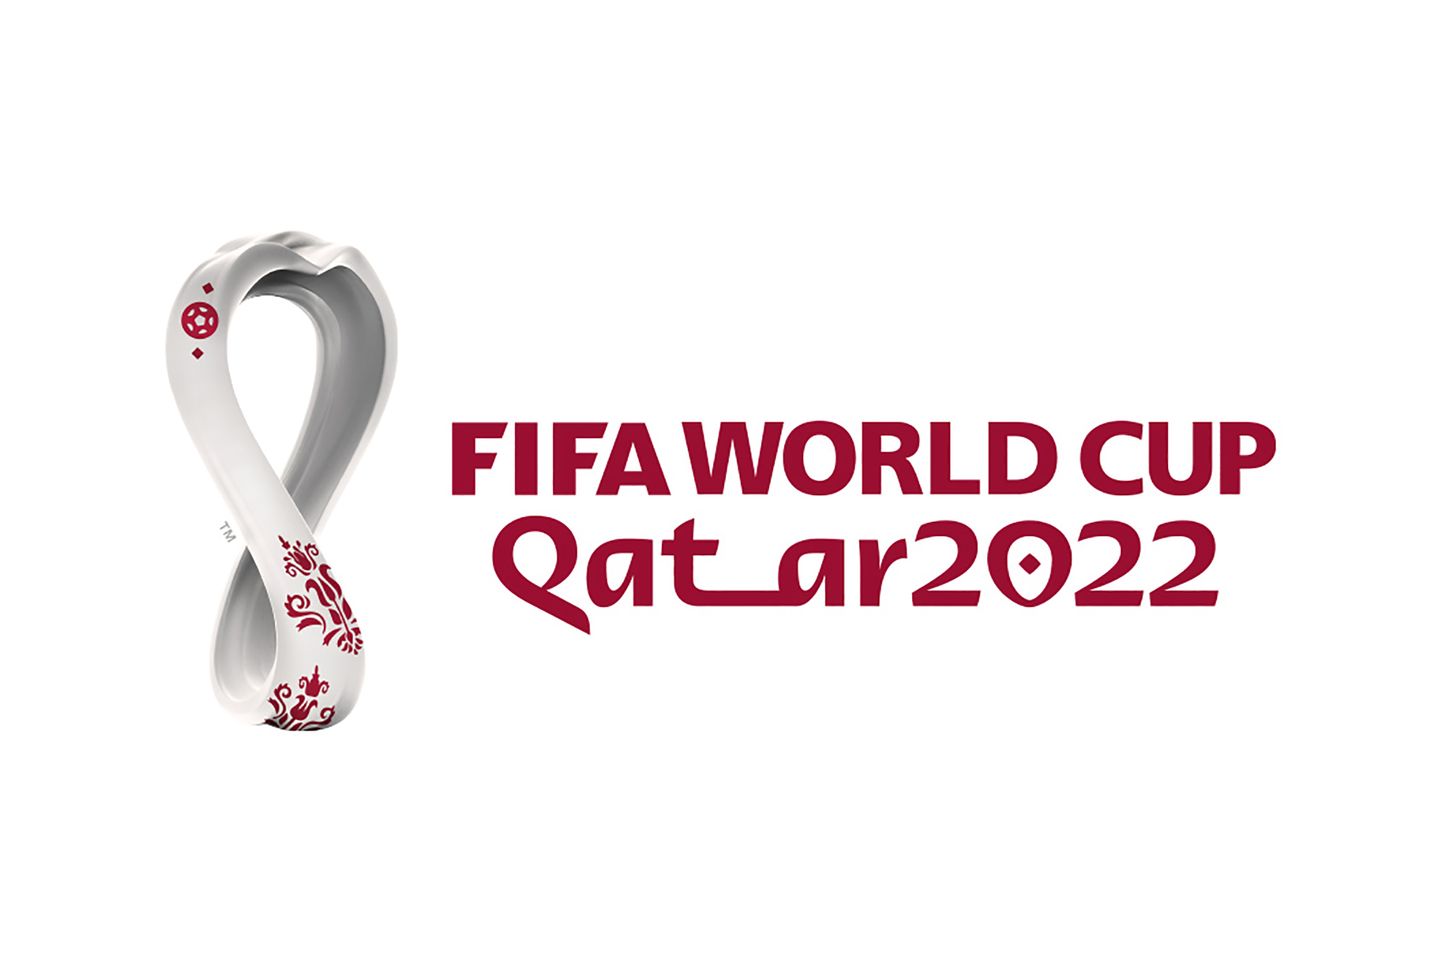 FIFA WORLD CUP Qatar 2022 logo